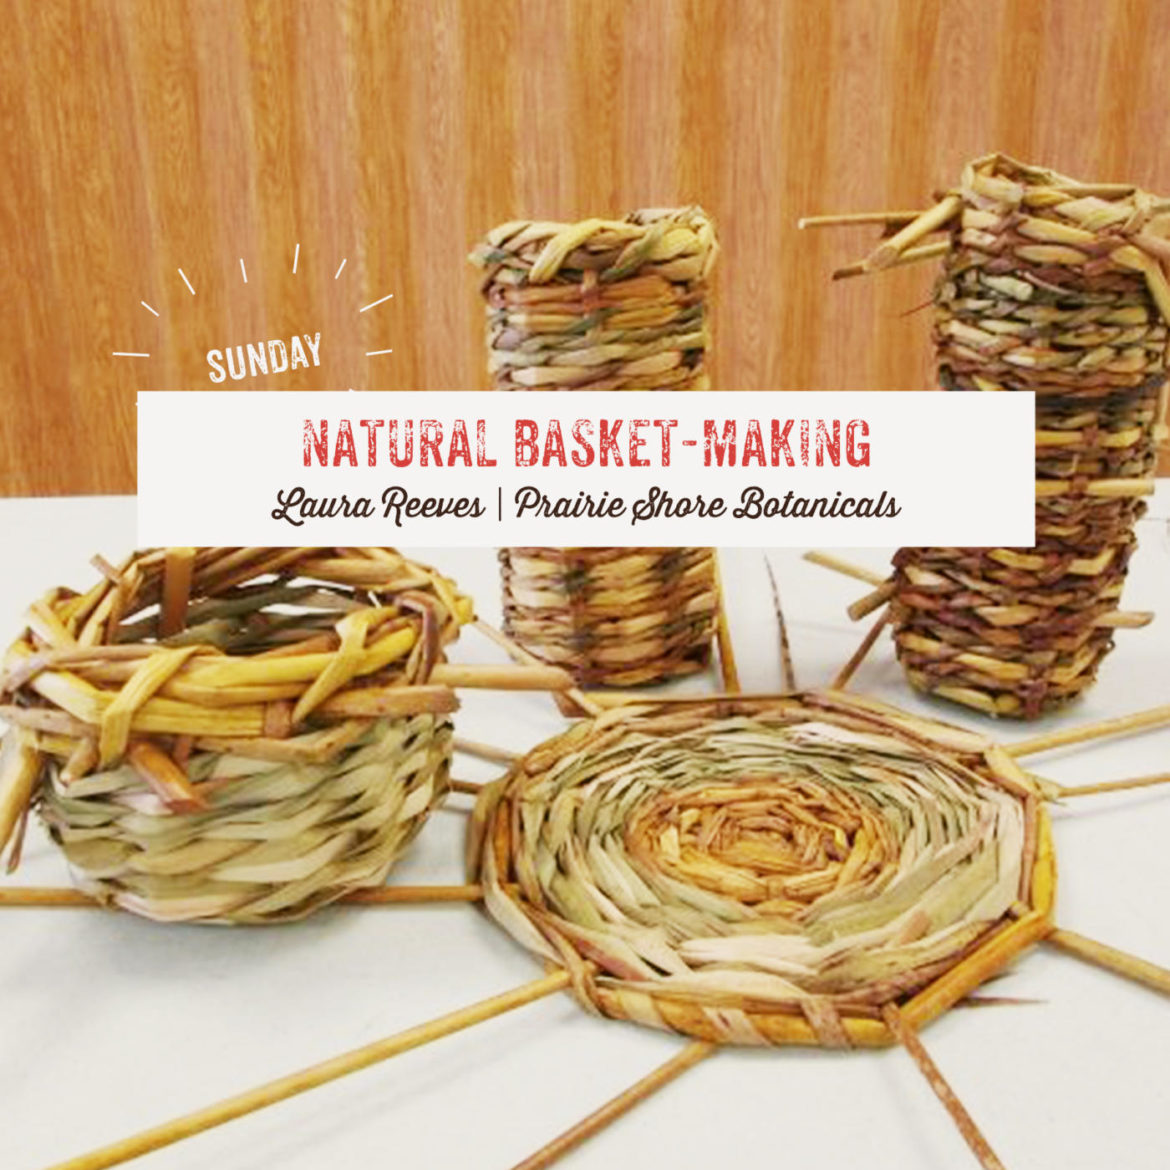 Natural Basket-making